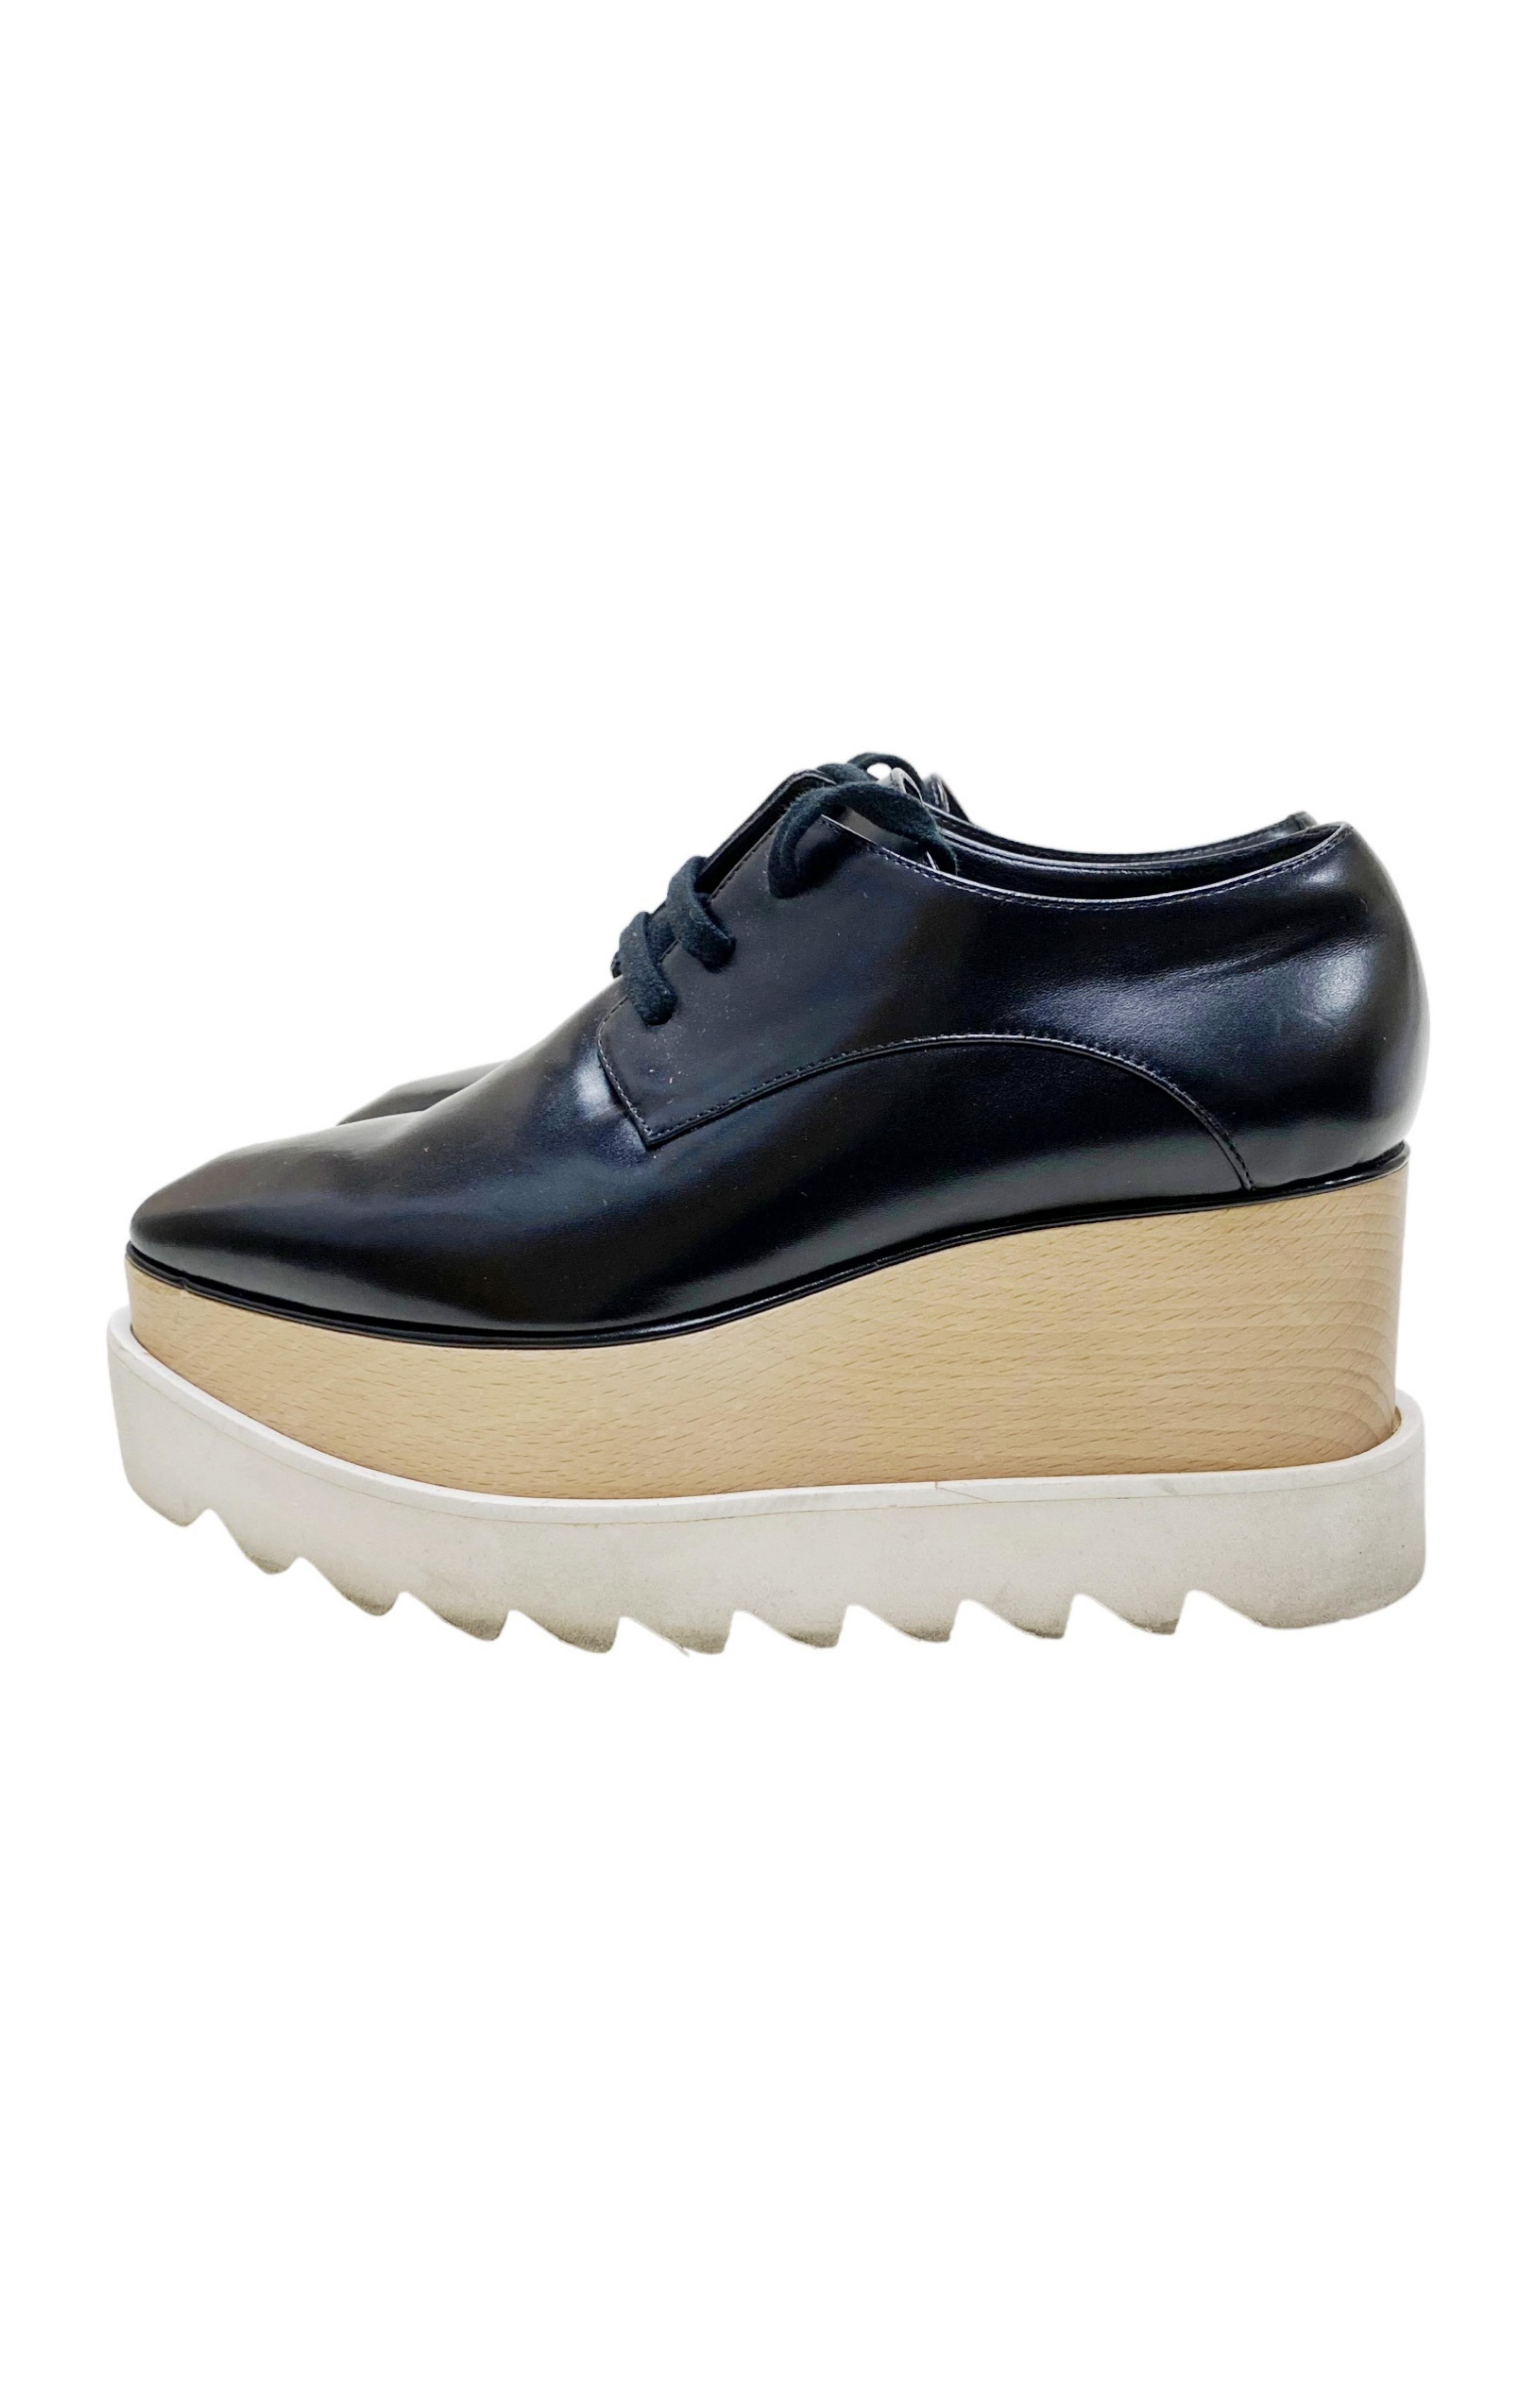 STELLA MCCARTNEY Shoes Size: EUR 34 / Fits like US 4